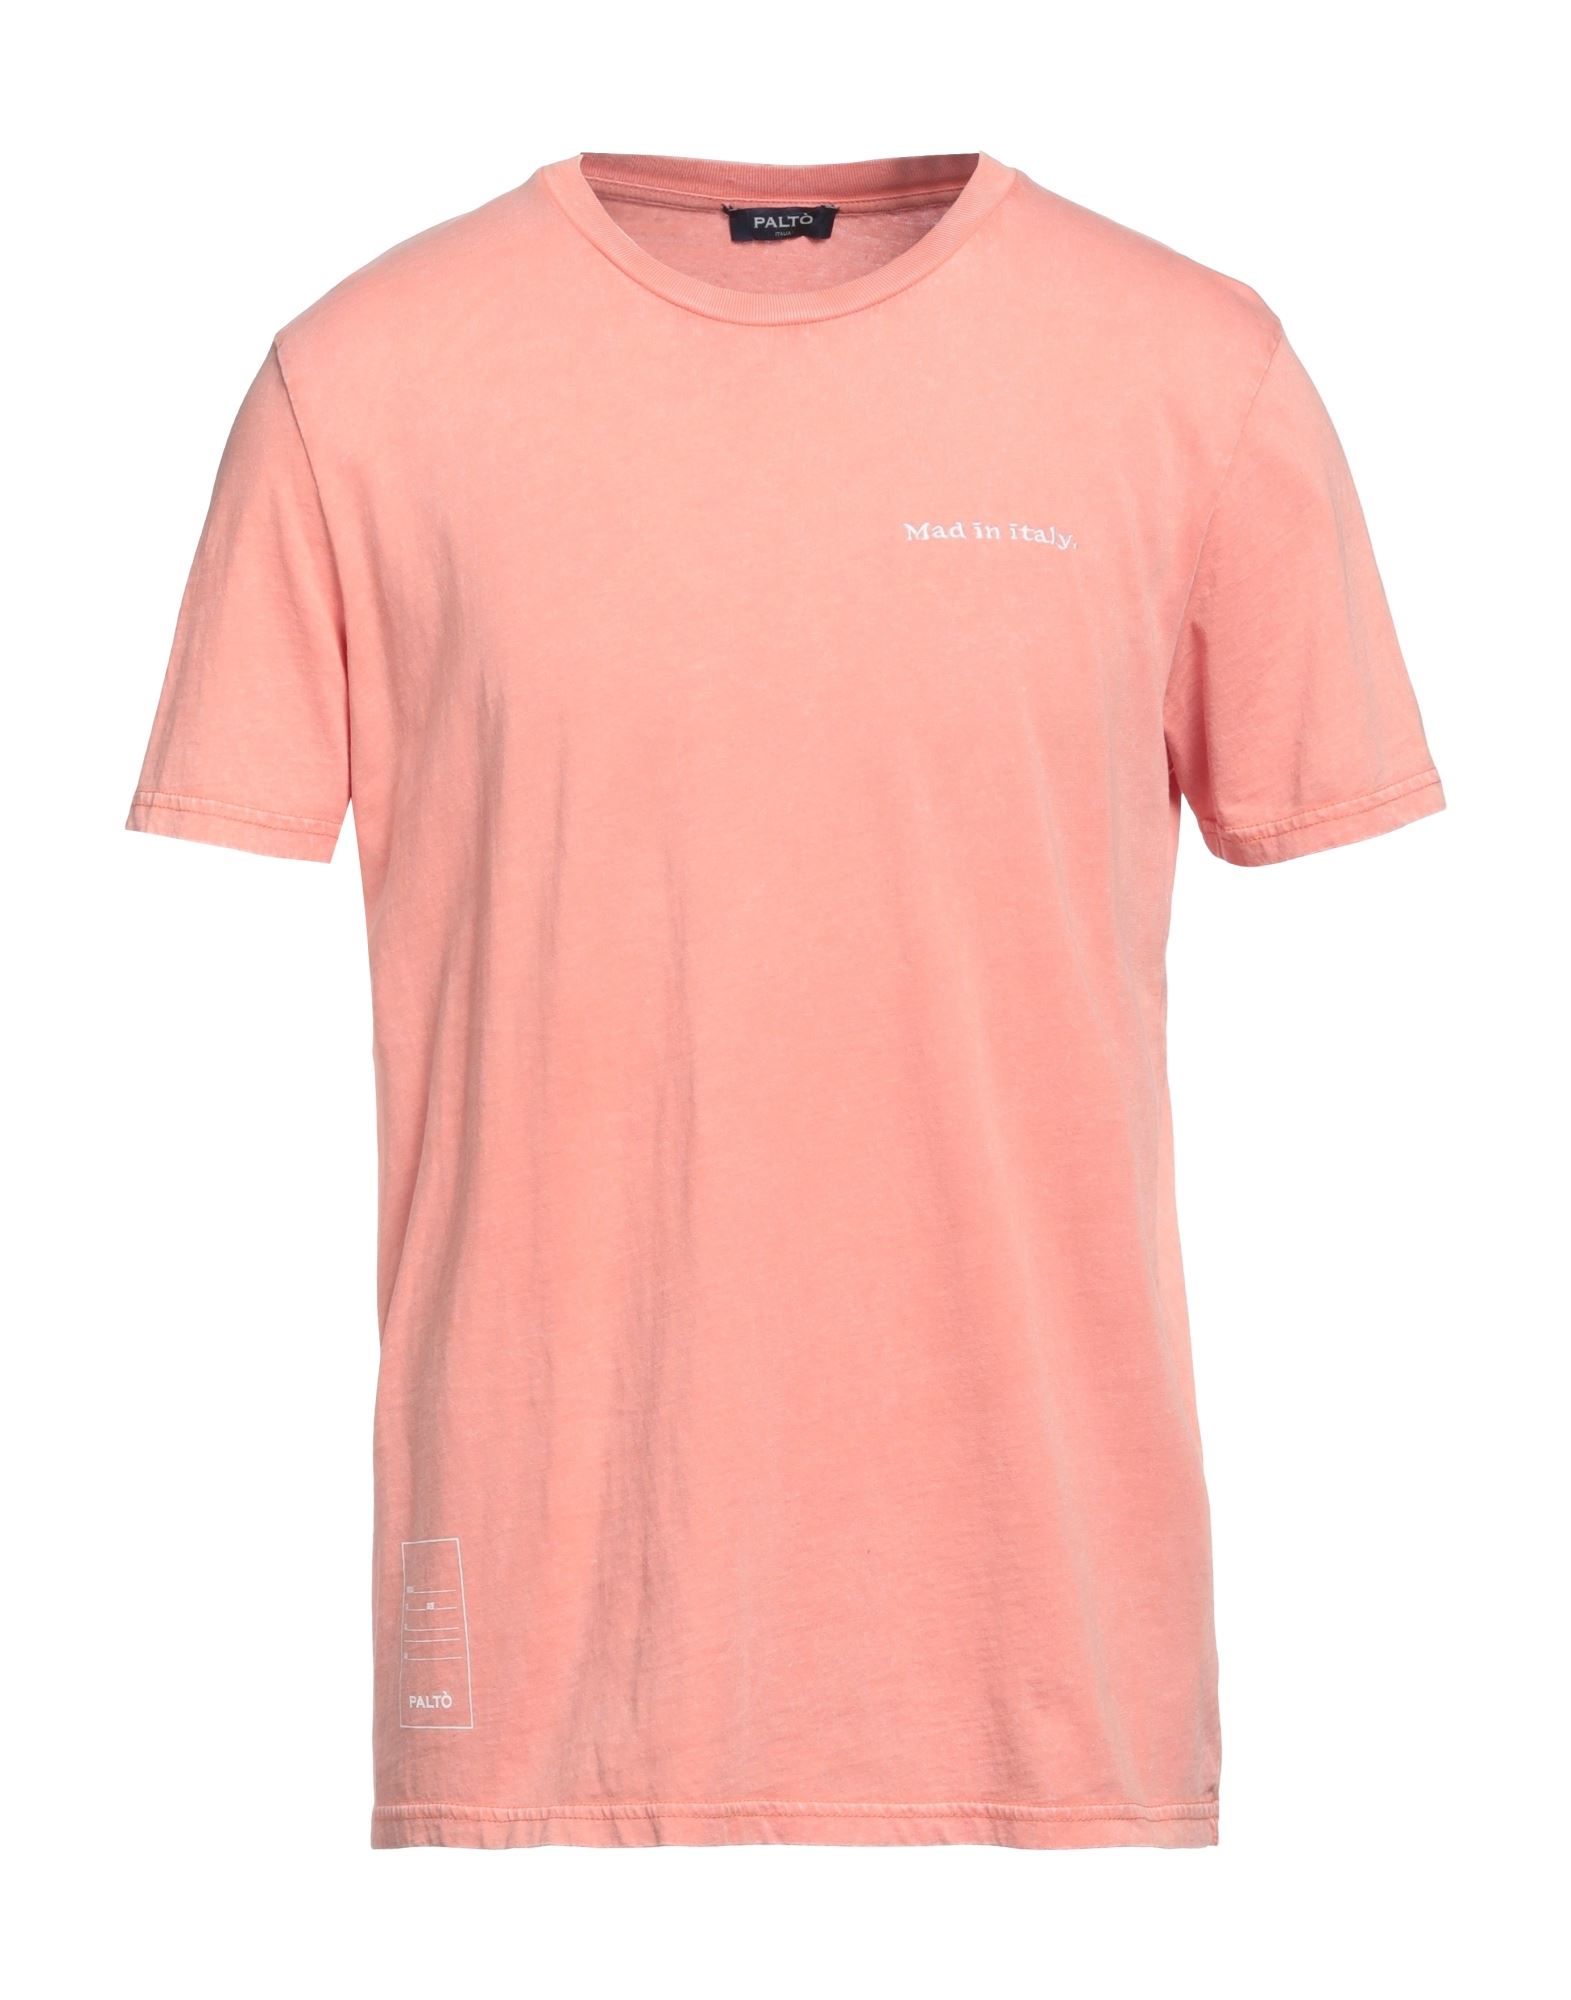 Paltò T-shirts In Salmon Pink